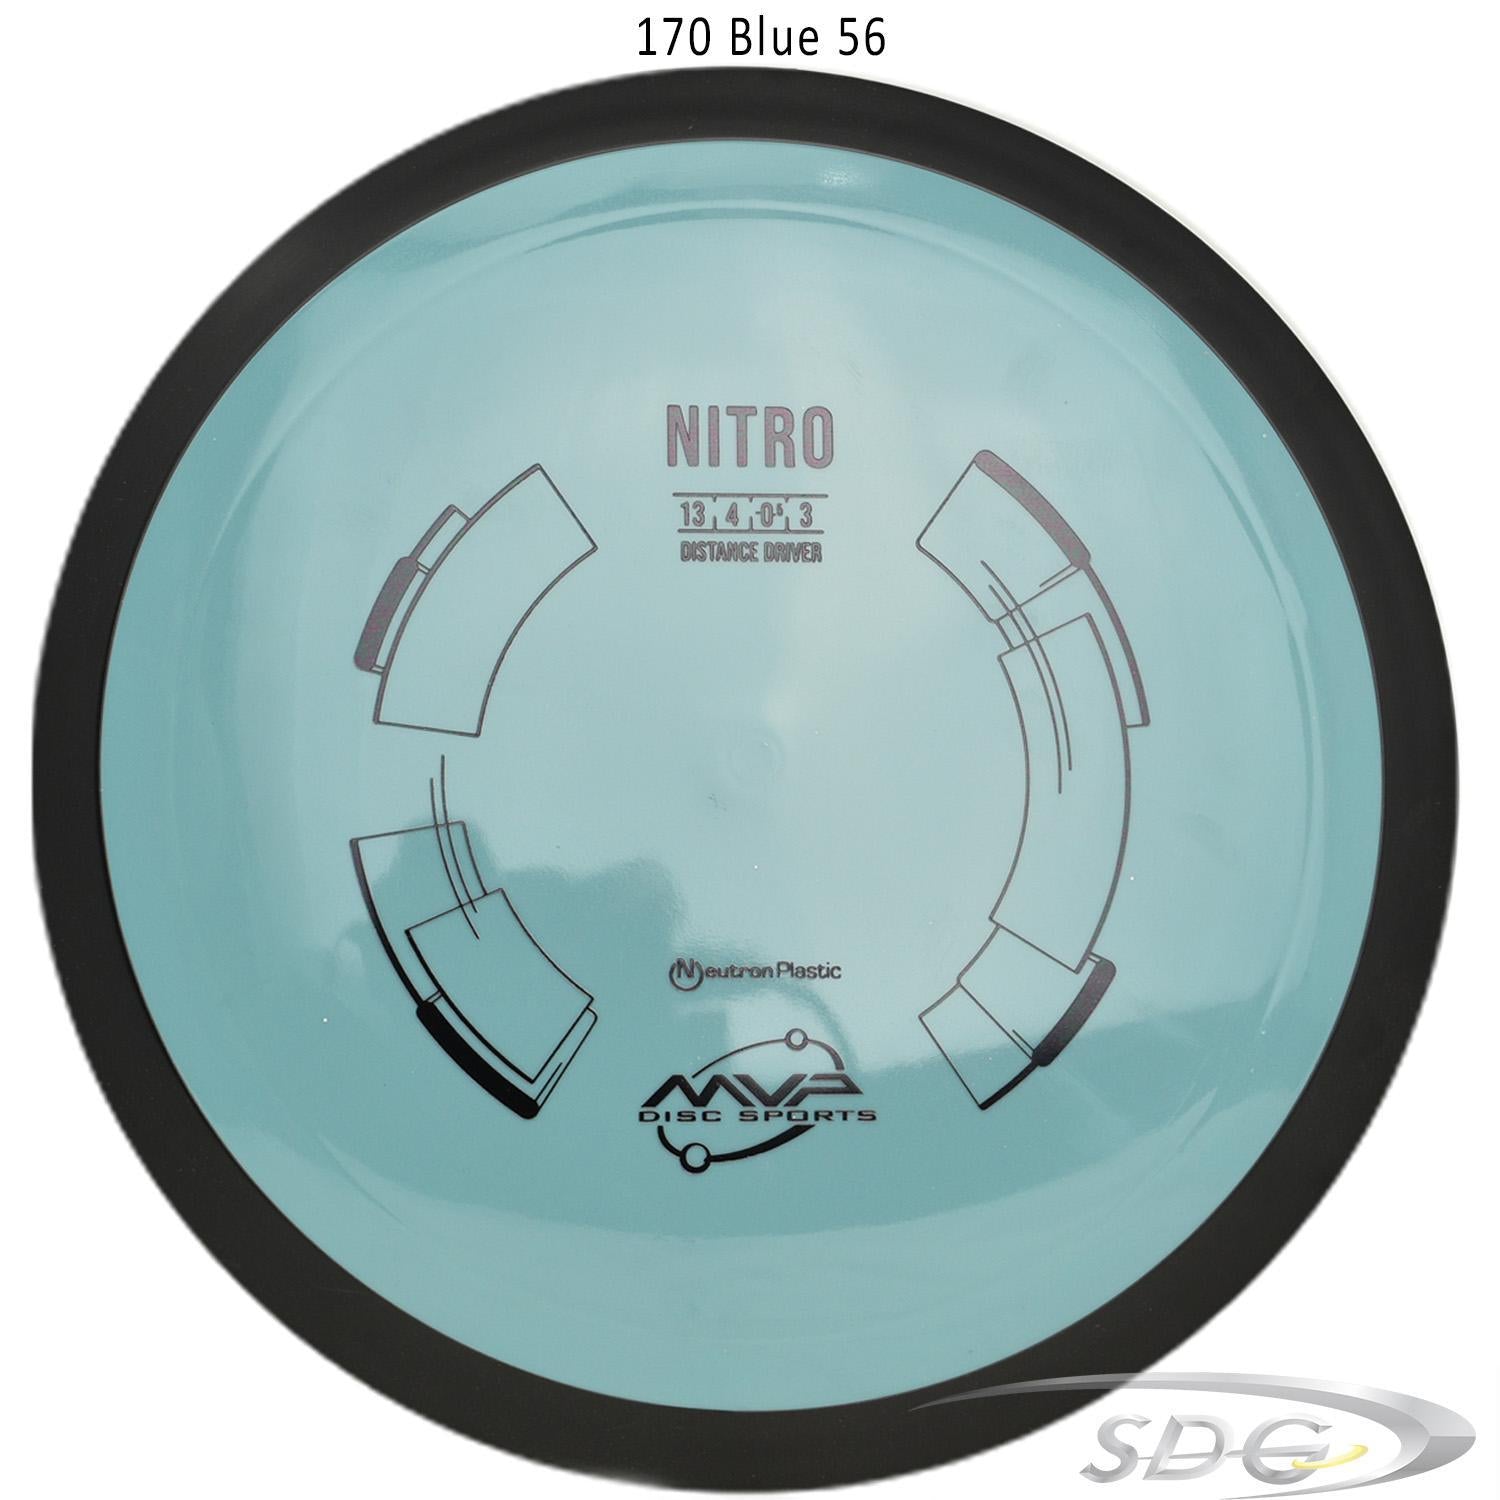 mvp-neutron-nitro-disc-golf-distance-driver 170 Blue 56 